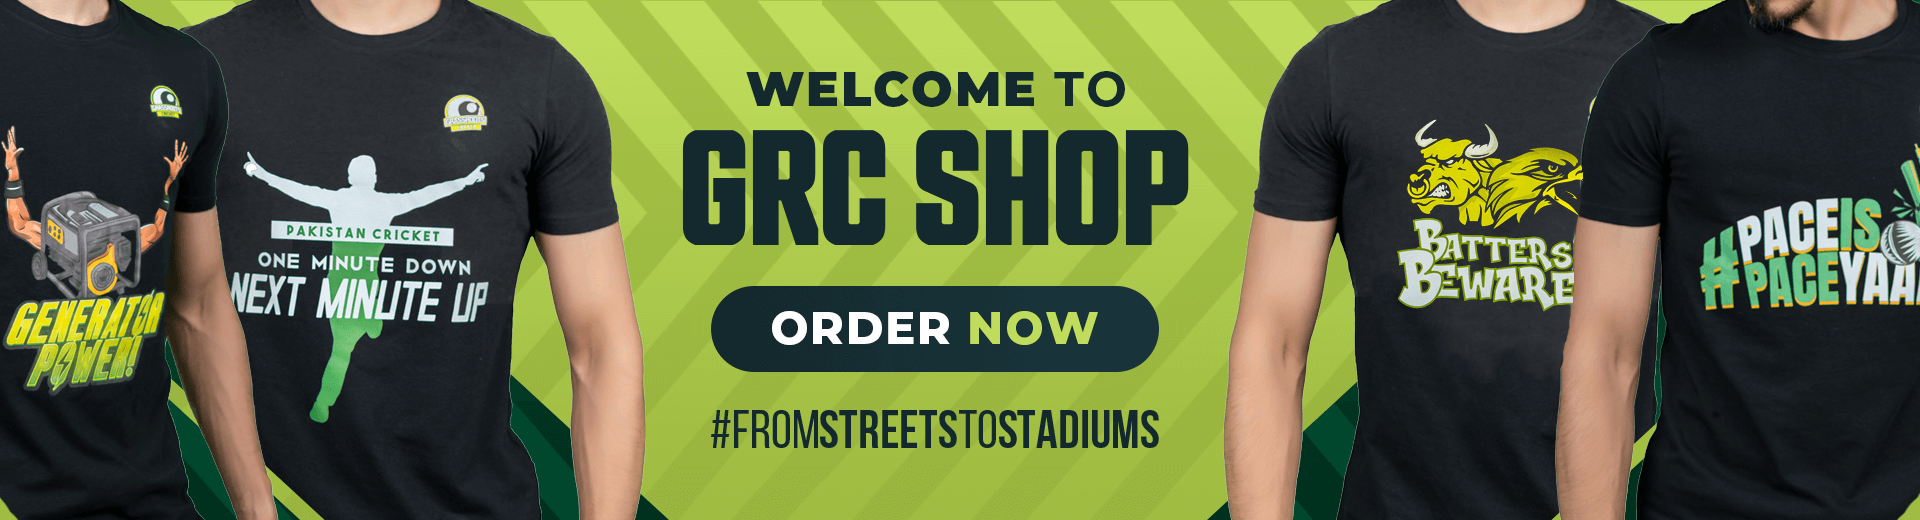 Grassroots Shop, Welcome to GRC Shop, Desktop Banner